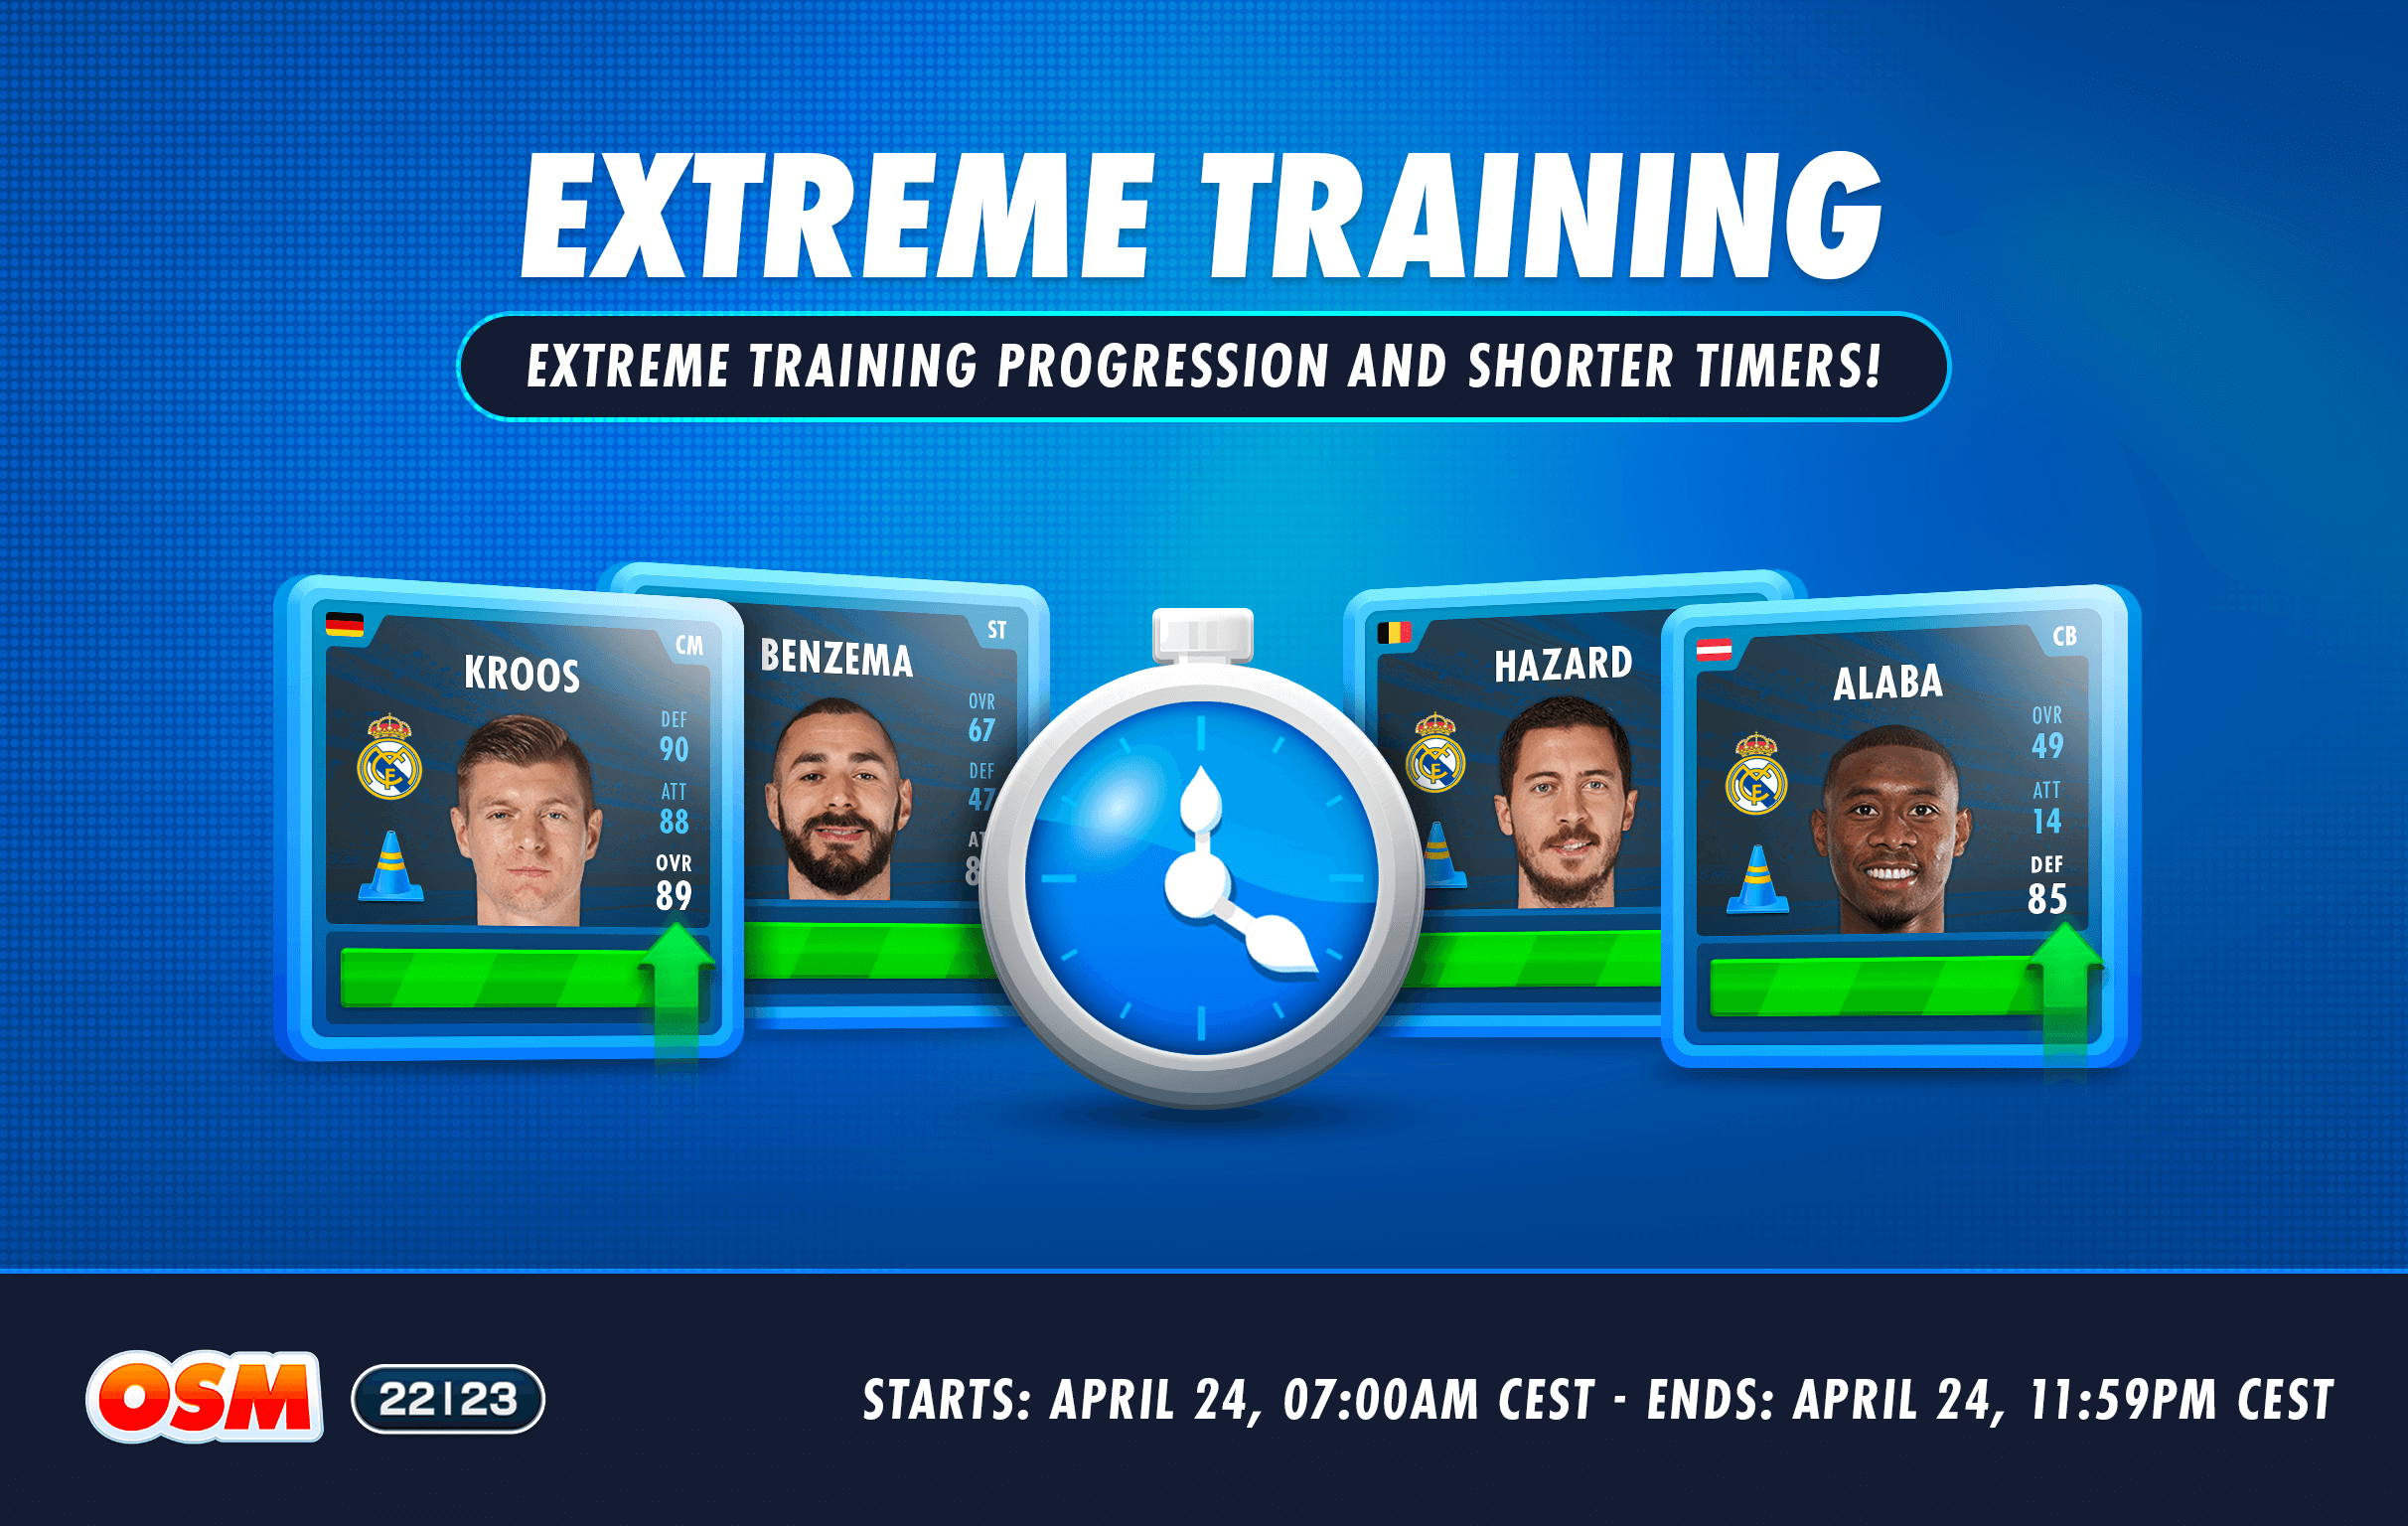 Forum_22-23 Extreme Training_REDDIT.png